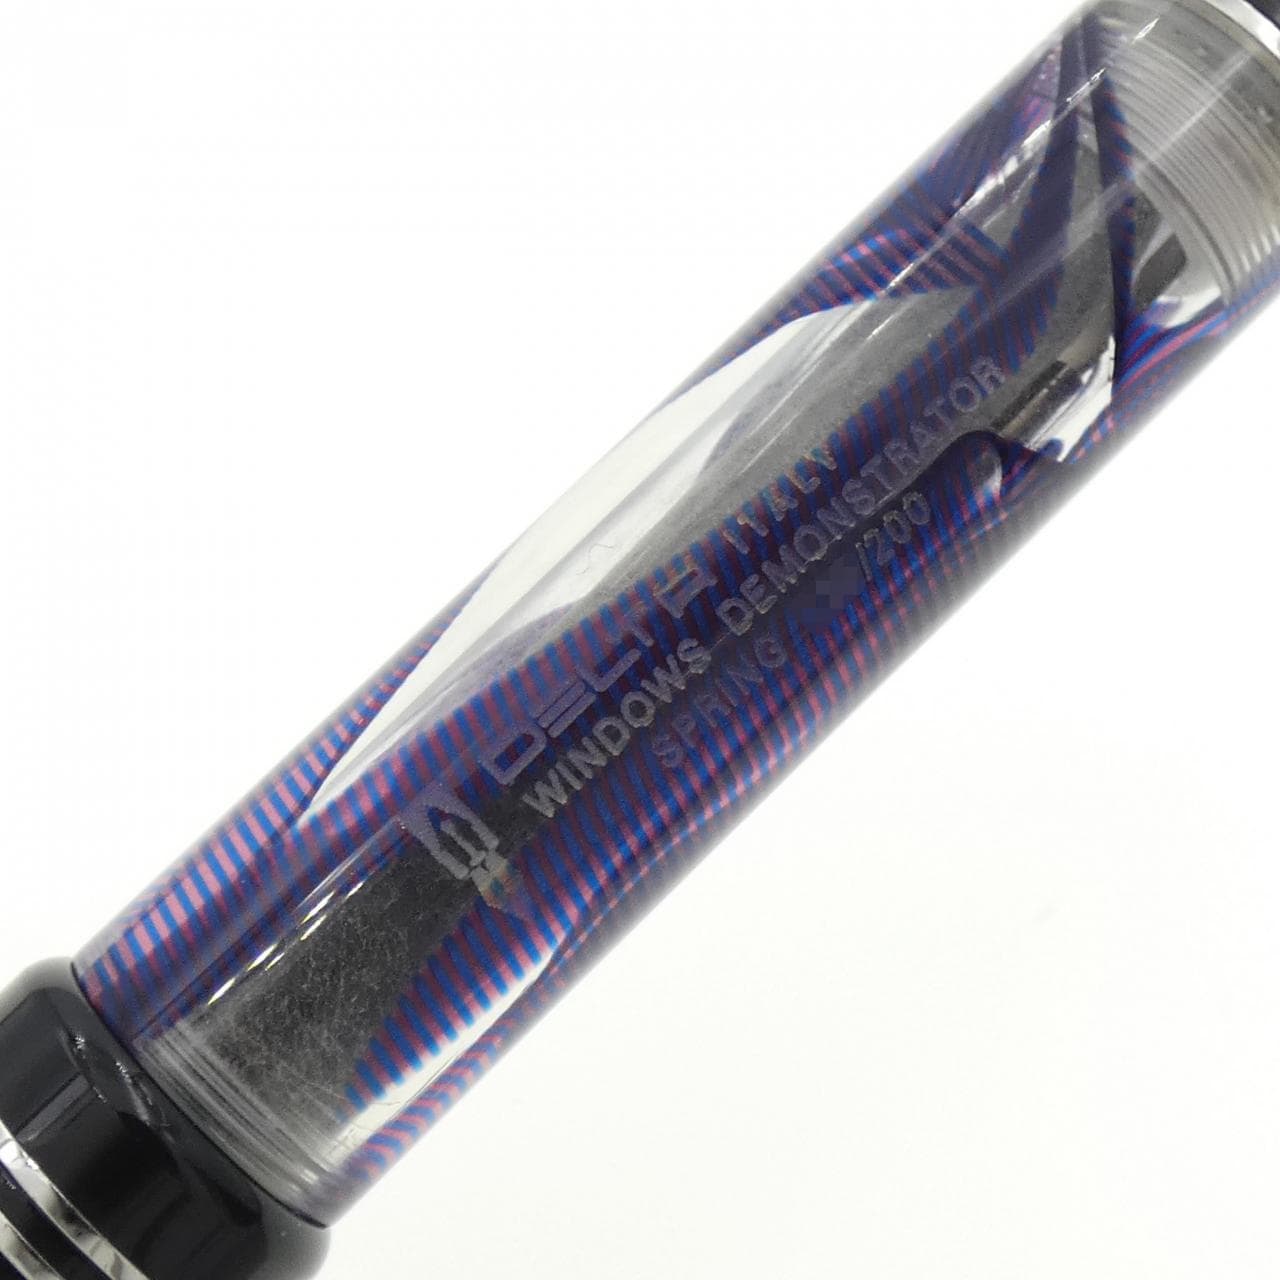 Delta Windows Demonstrator Spring Lavender-Stroke Fountain Pen